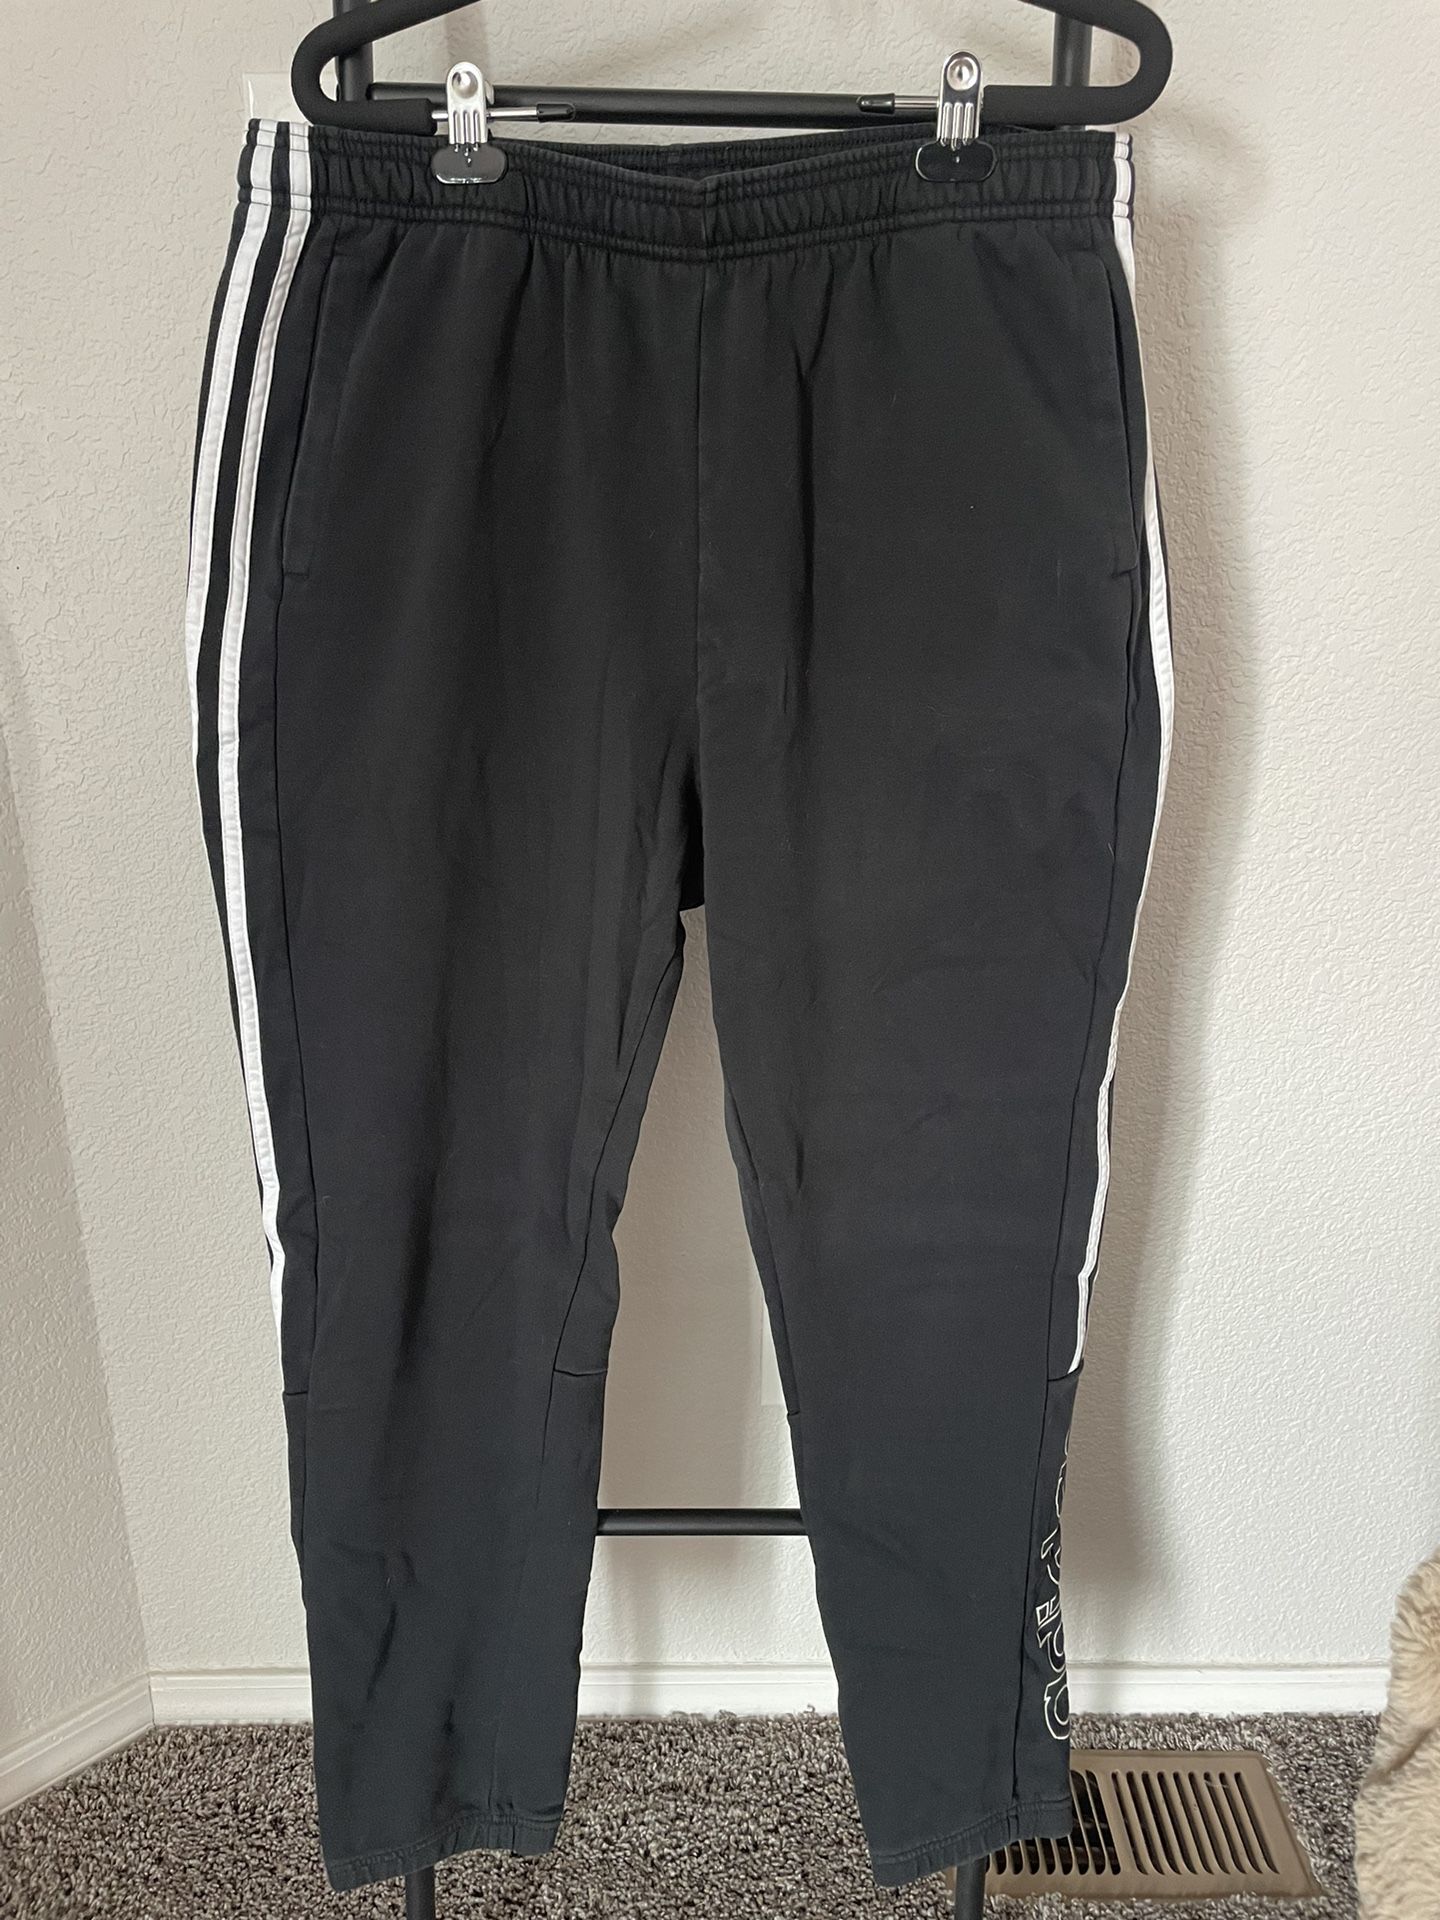 Men’s Adidas Sweatpants